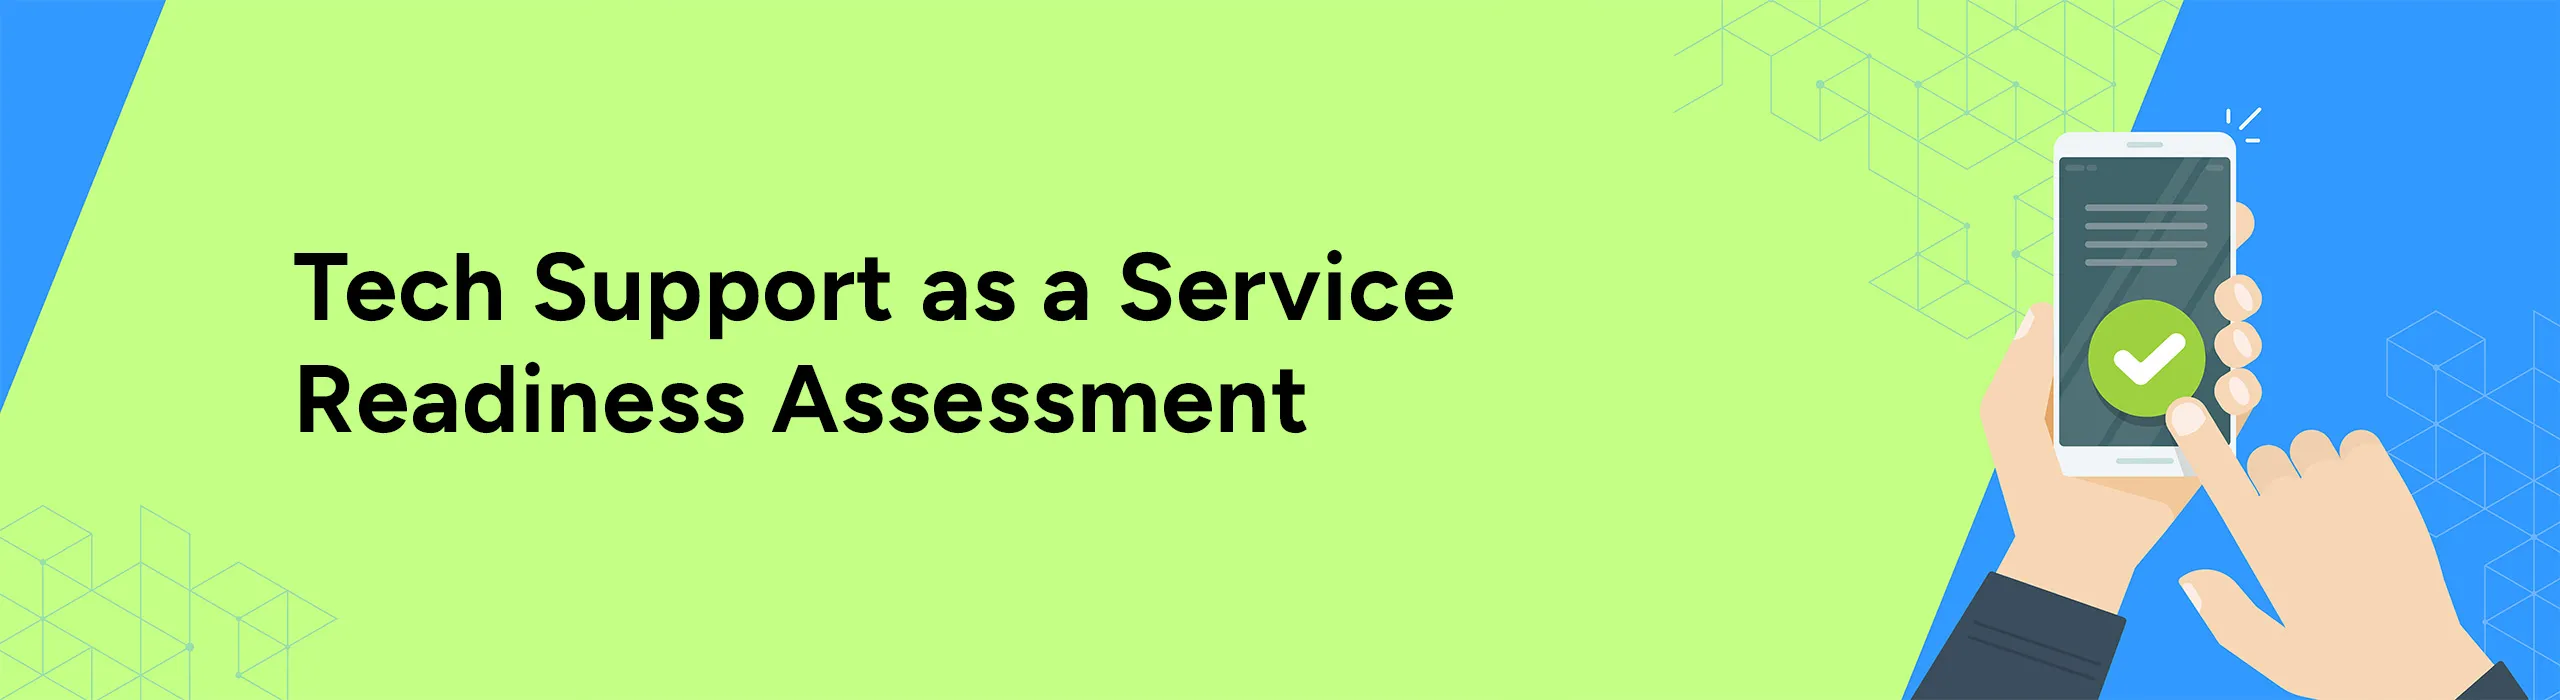 Tech Support Readiness Assessment